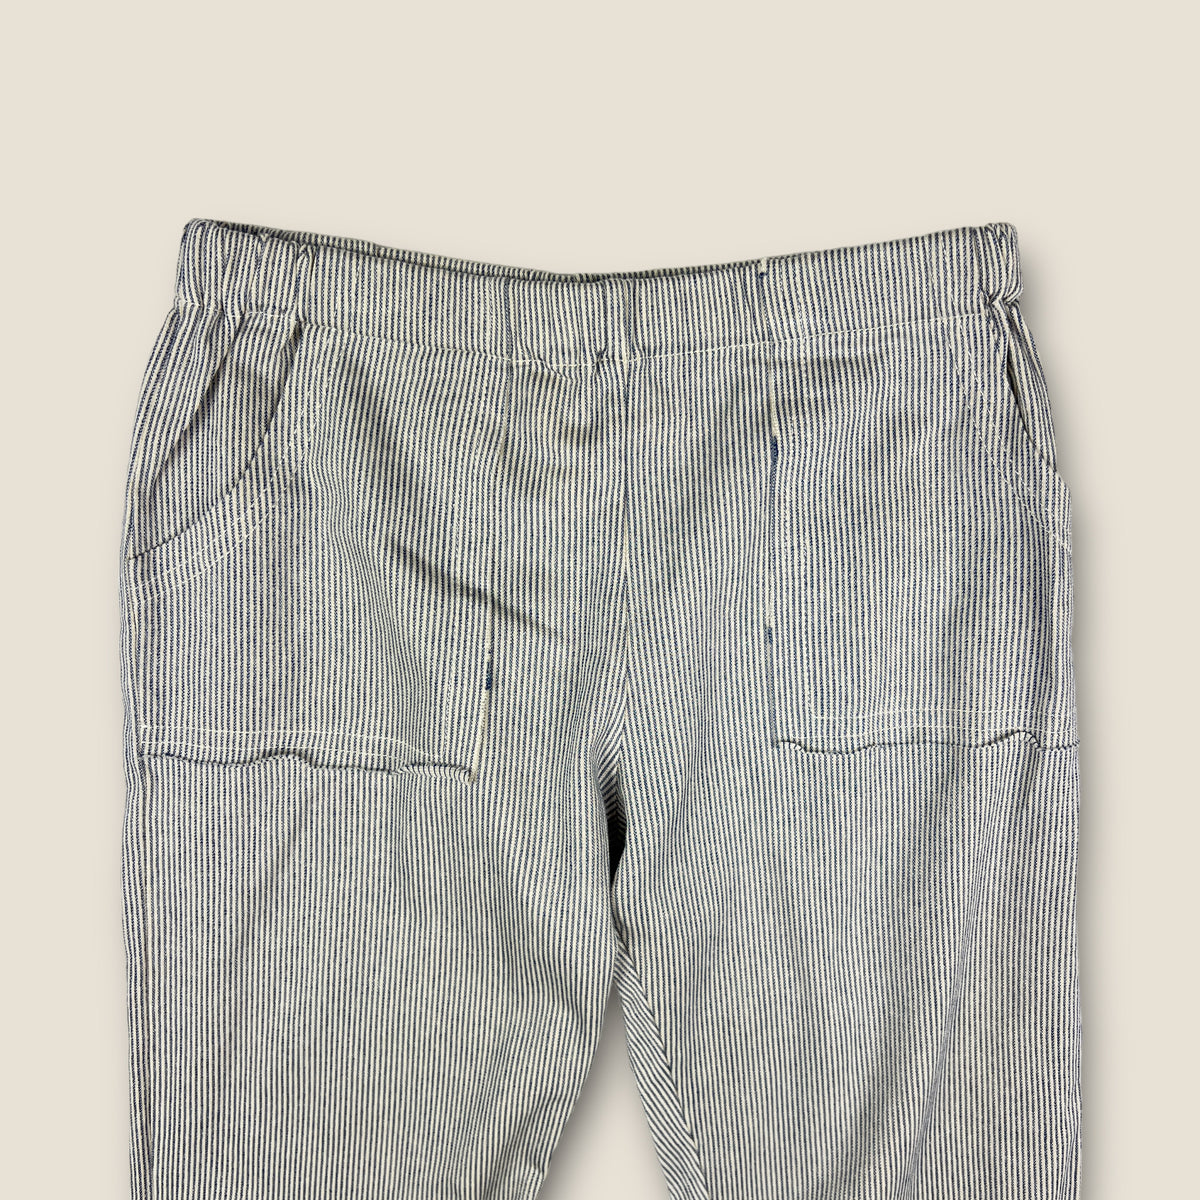 Taja Woven Cotton Pin Striped Trousers size 8-10 years